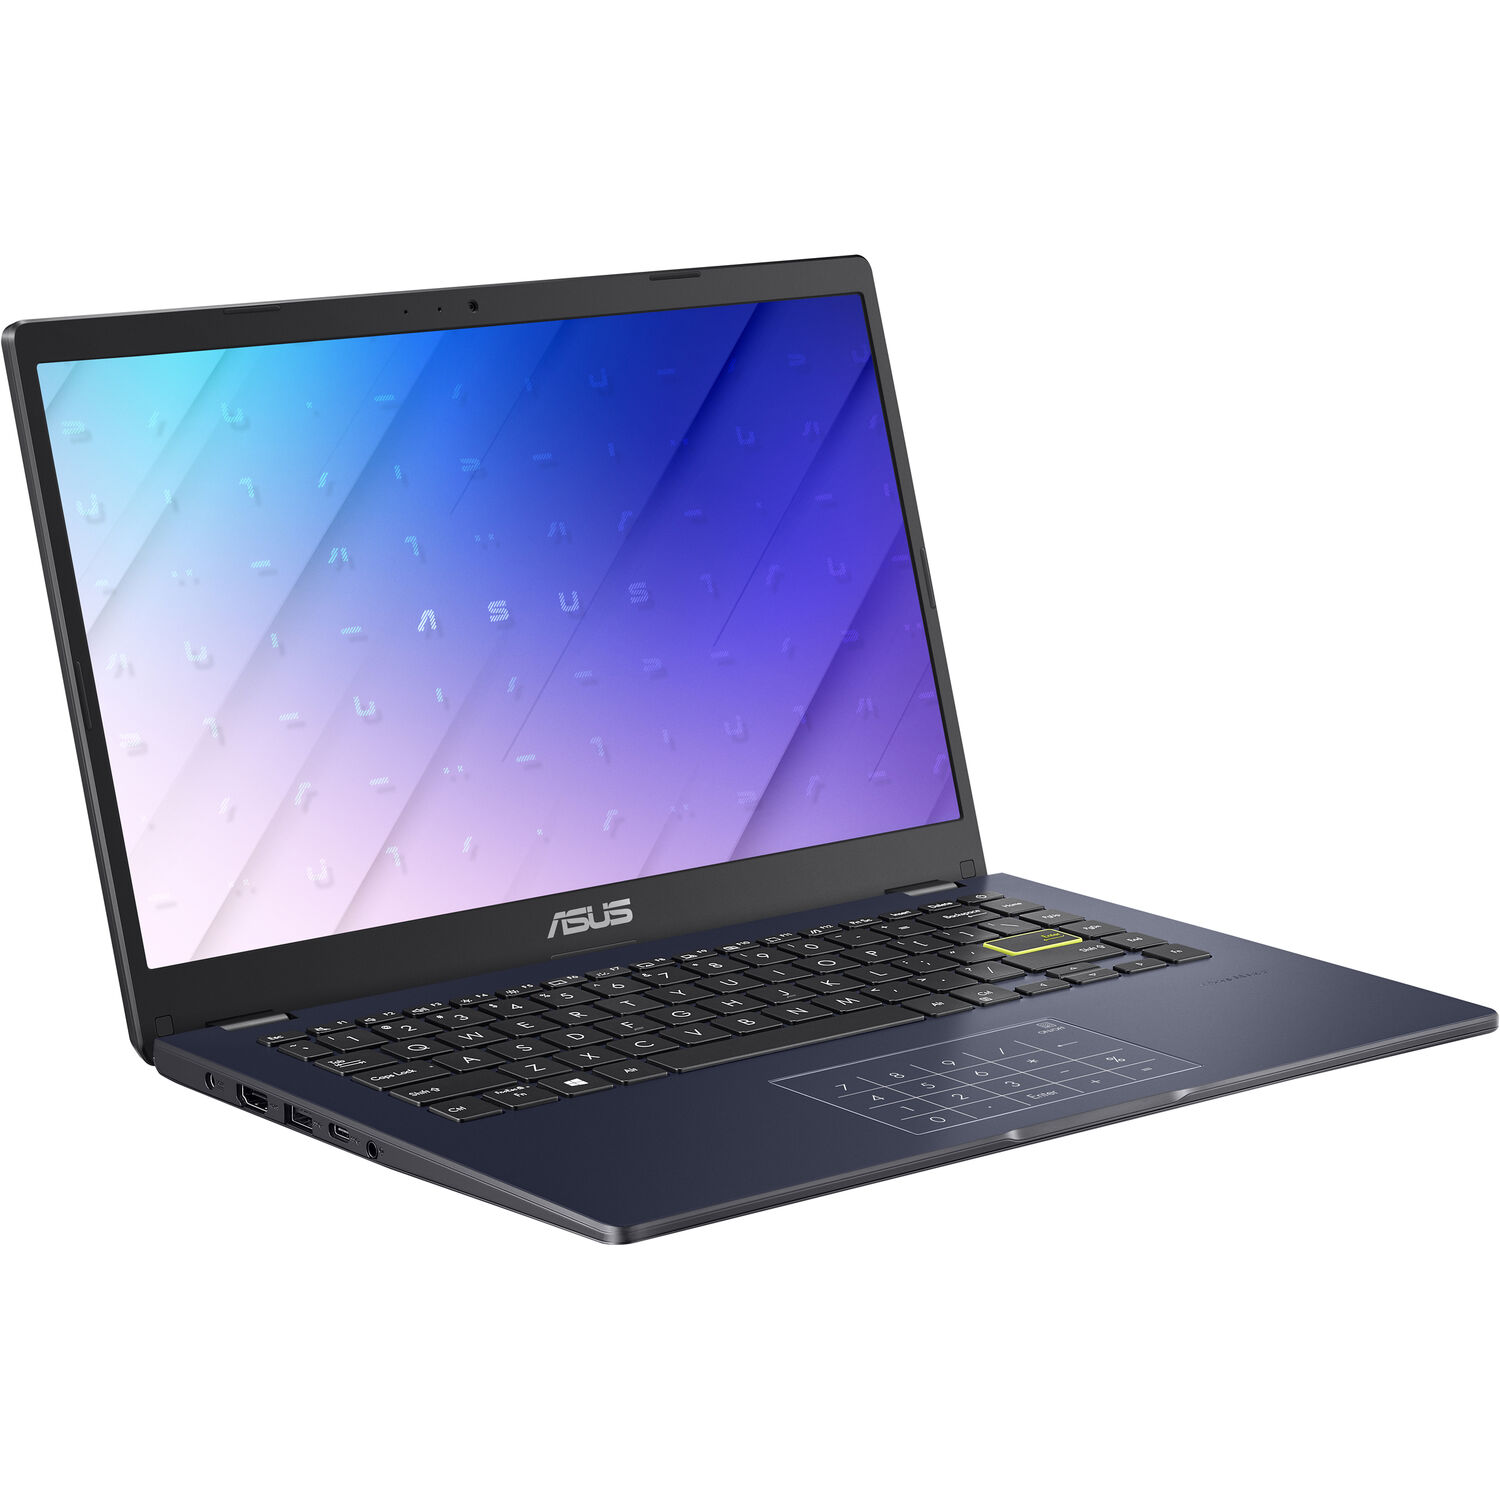 ASUS 14 L410 Everyday Value Laptop (Intel Celeron N4020 2-Core, 4GB RAM, 256GB PCIe SSD, 14.0" Full HD (1920x1080), Intel UHD 600, Wifi, Bluetooth, Webcam, 1xUSB 3.2, 1xHDMI, Win 10 Home) - image 2 of 6